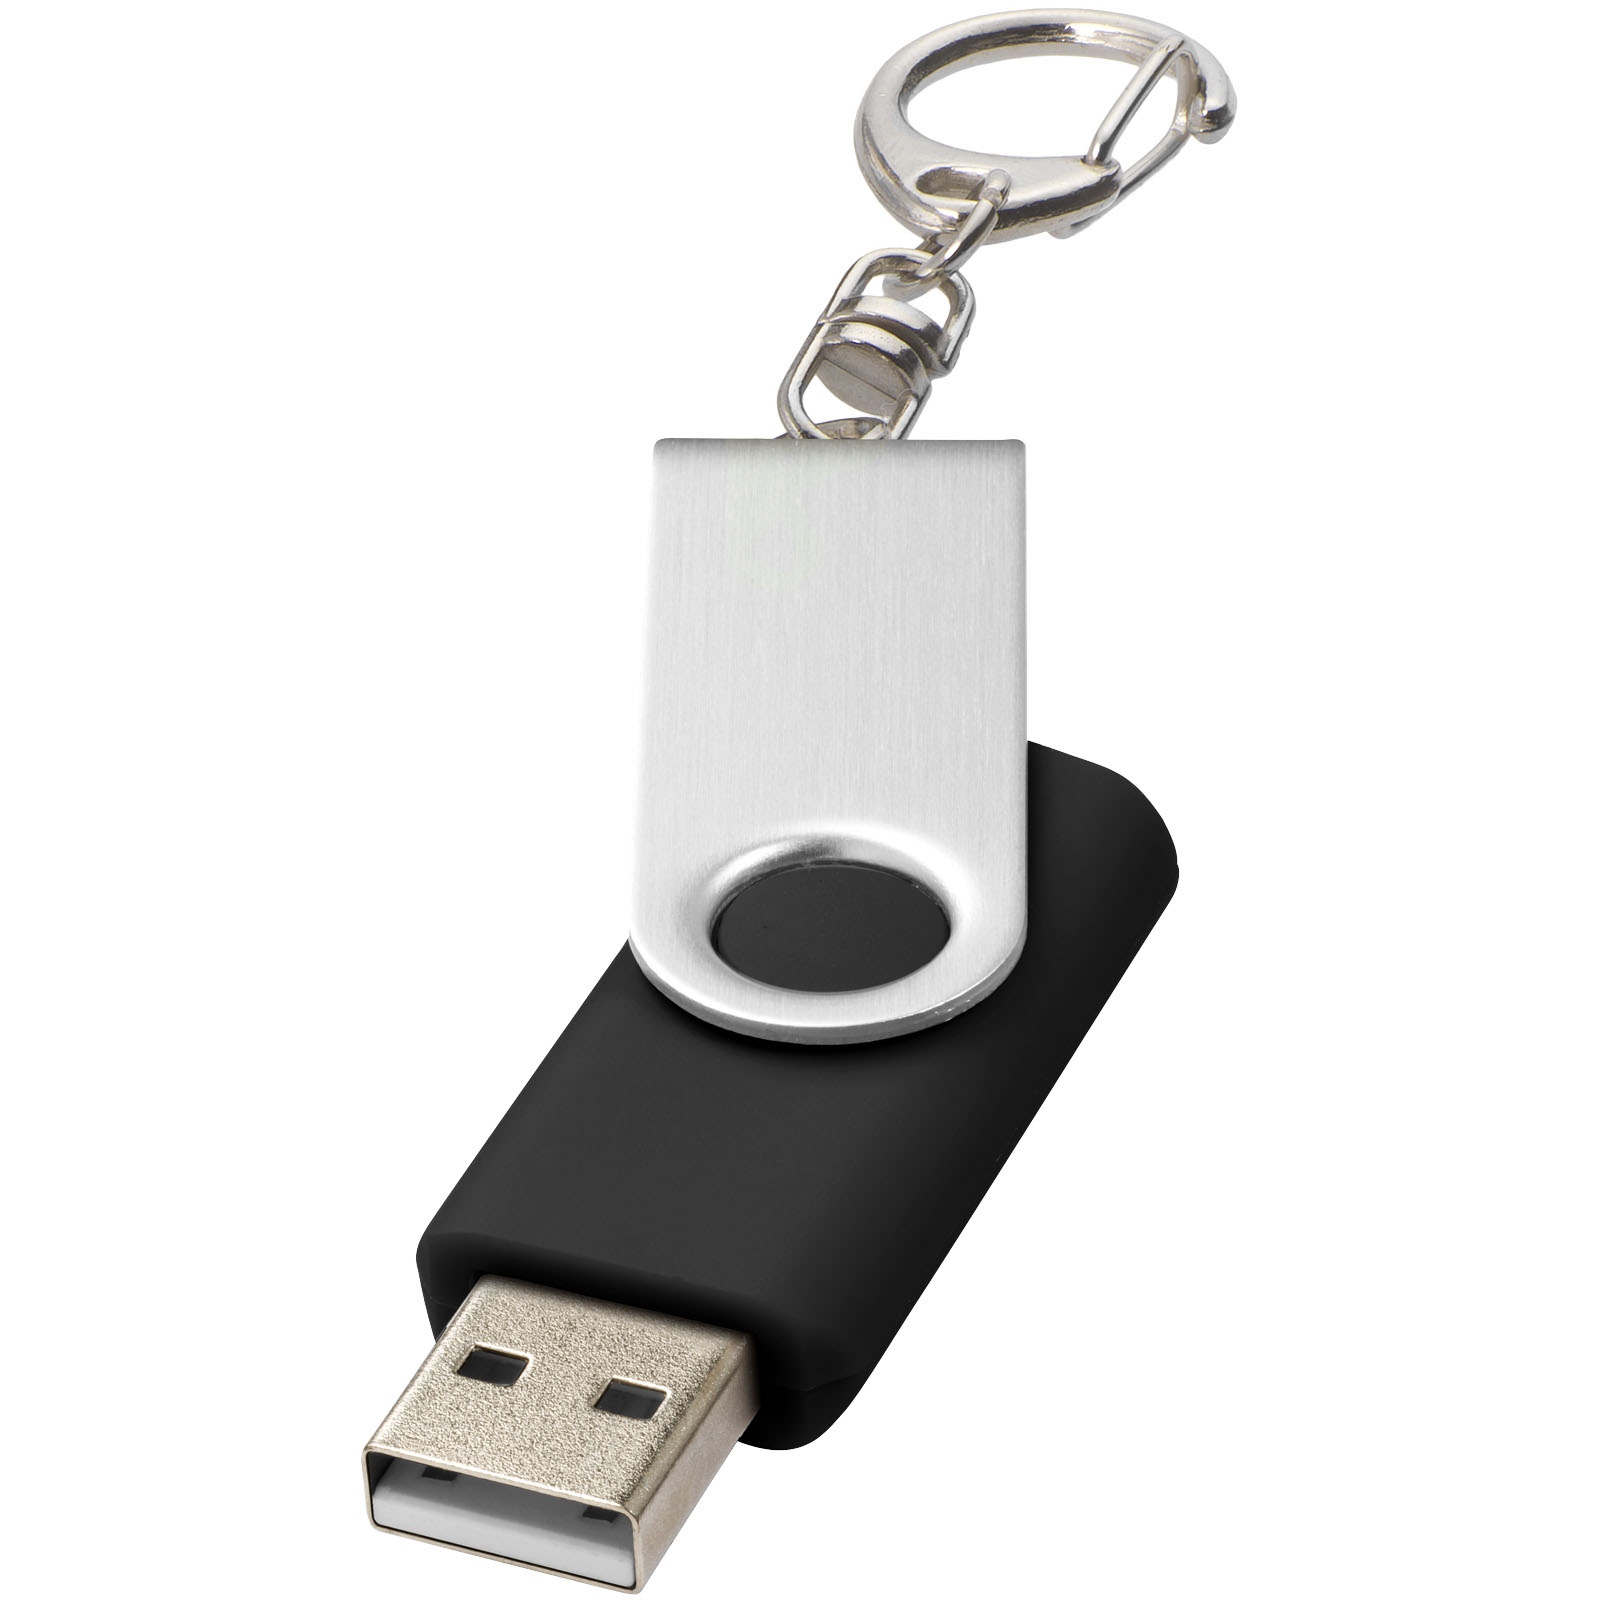 Goodies - Clé USB rotative personnalisée 1 giga